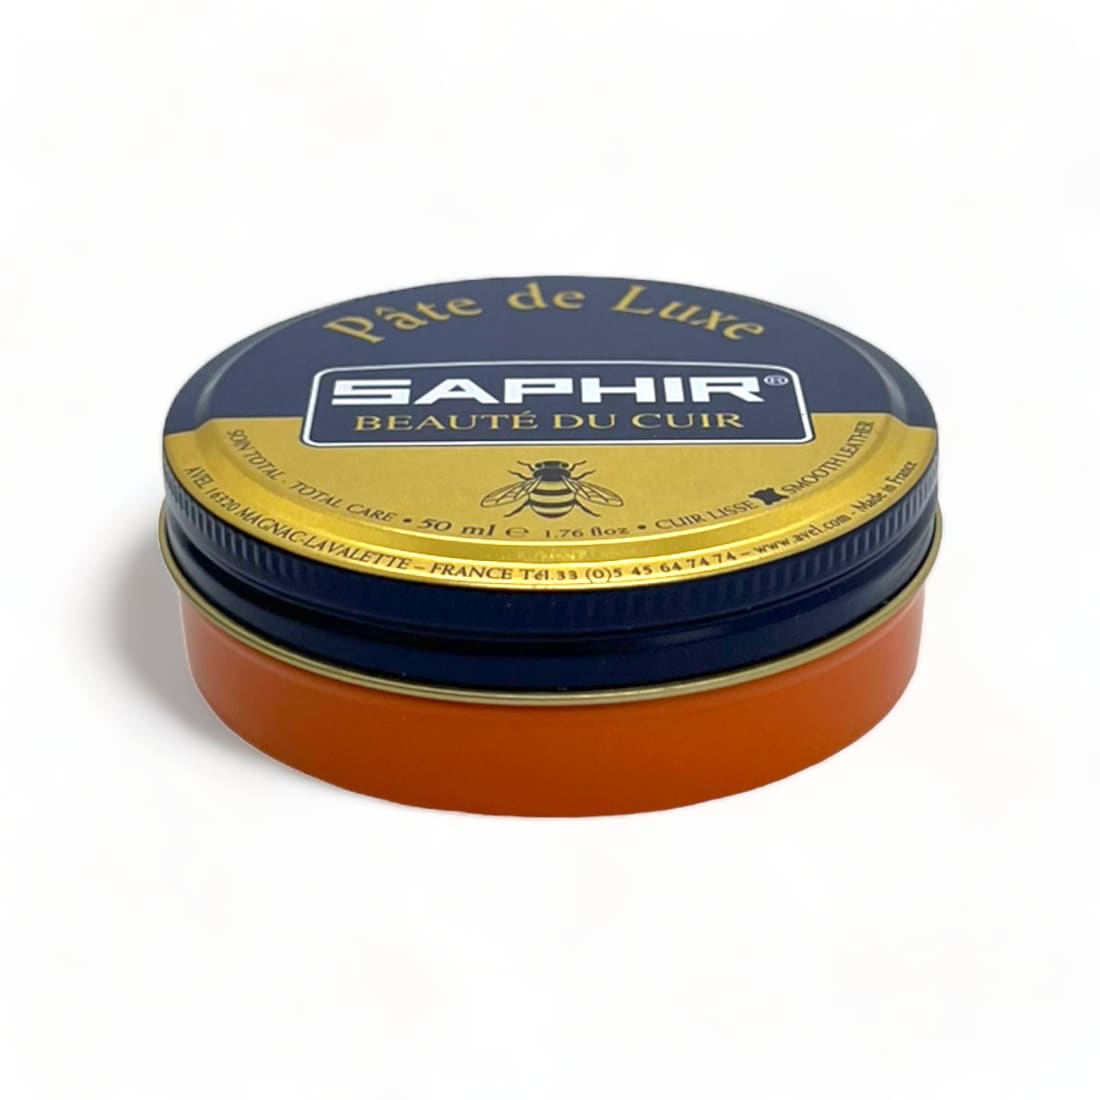 Cirage pâte de luxe Jaune Cire - Saphir - 50 ml -